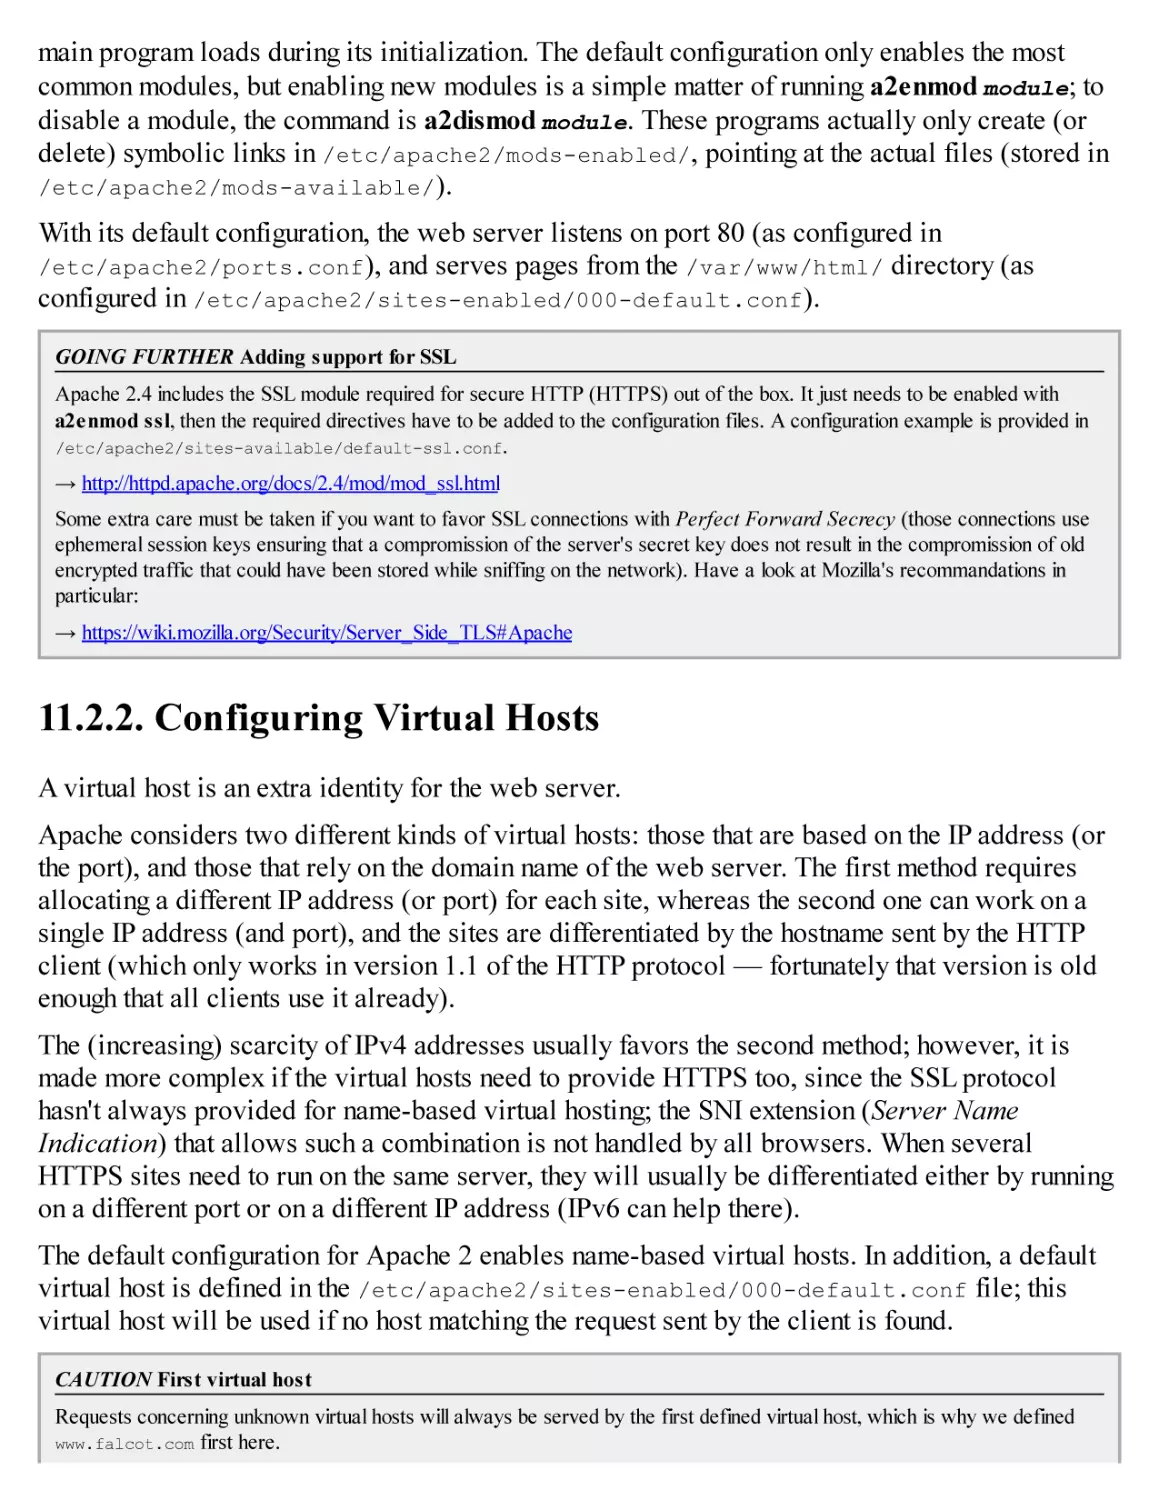 11.2.2. Configuring Virtual Hosts